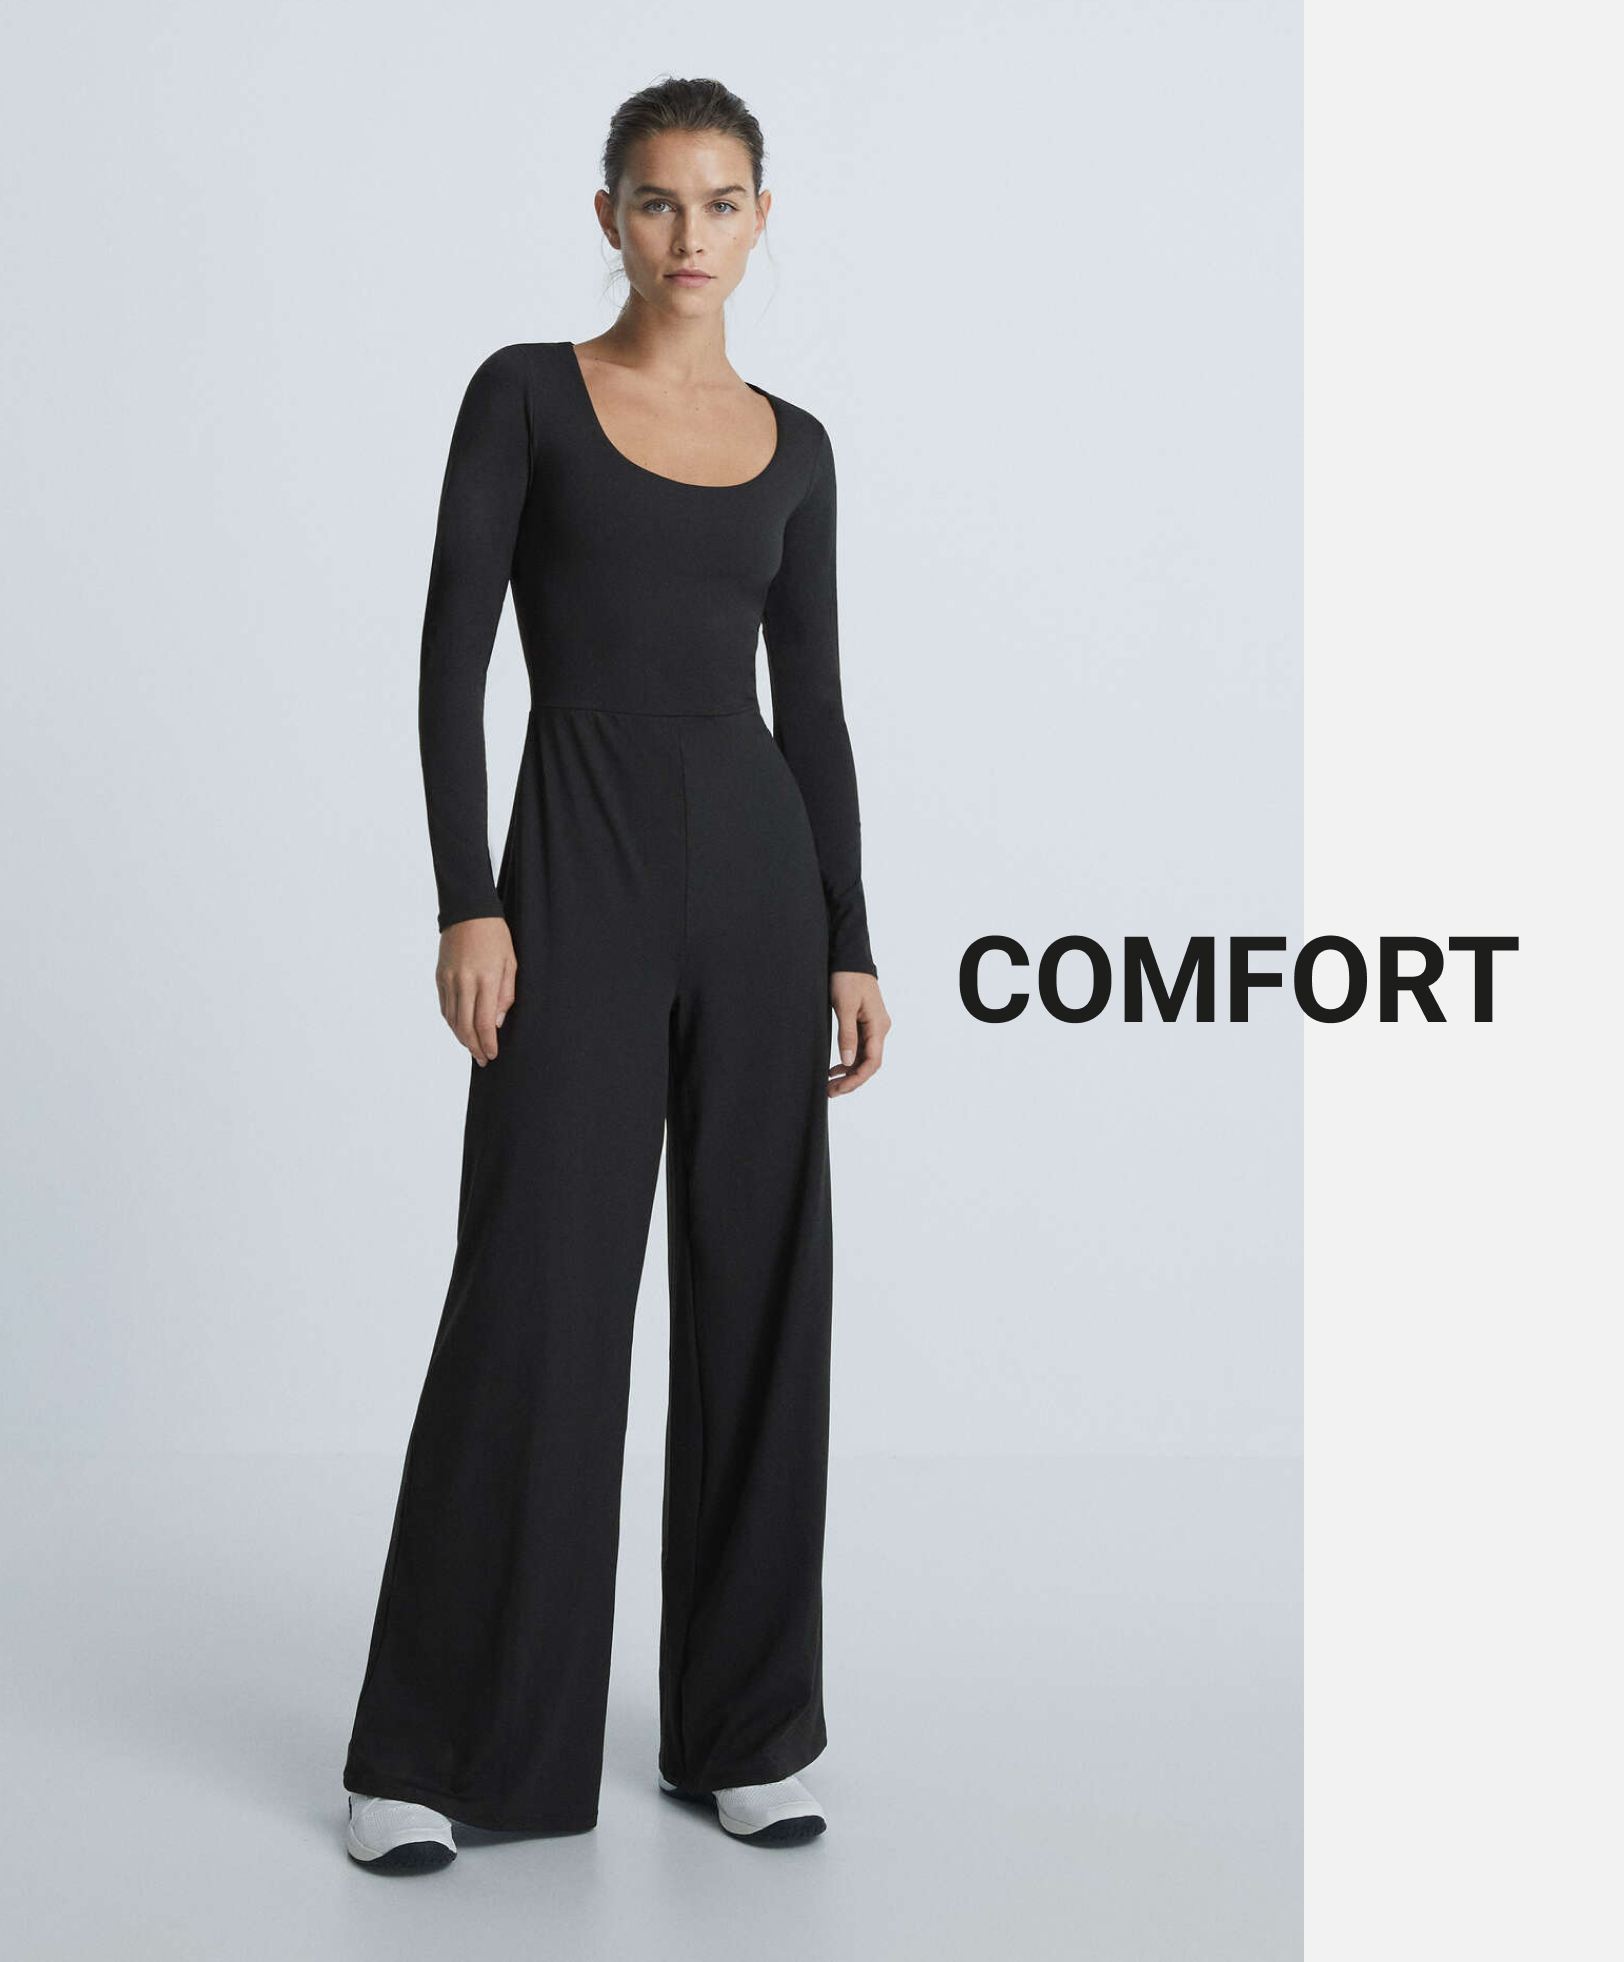 Comfort jumpsuit